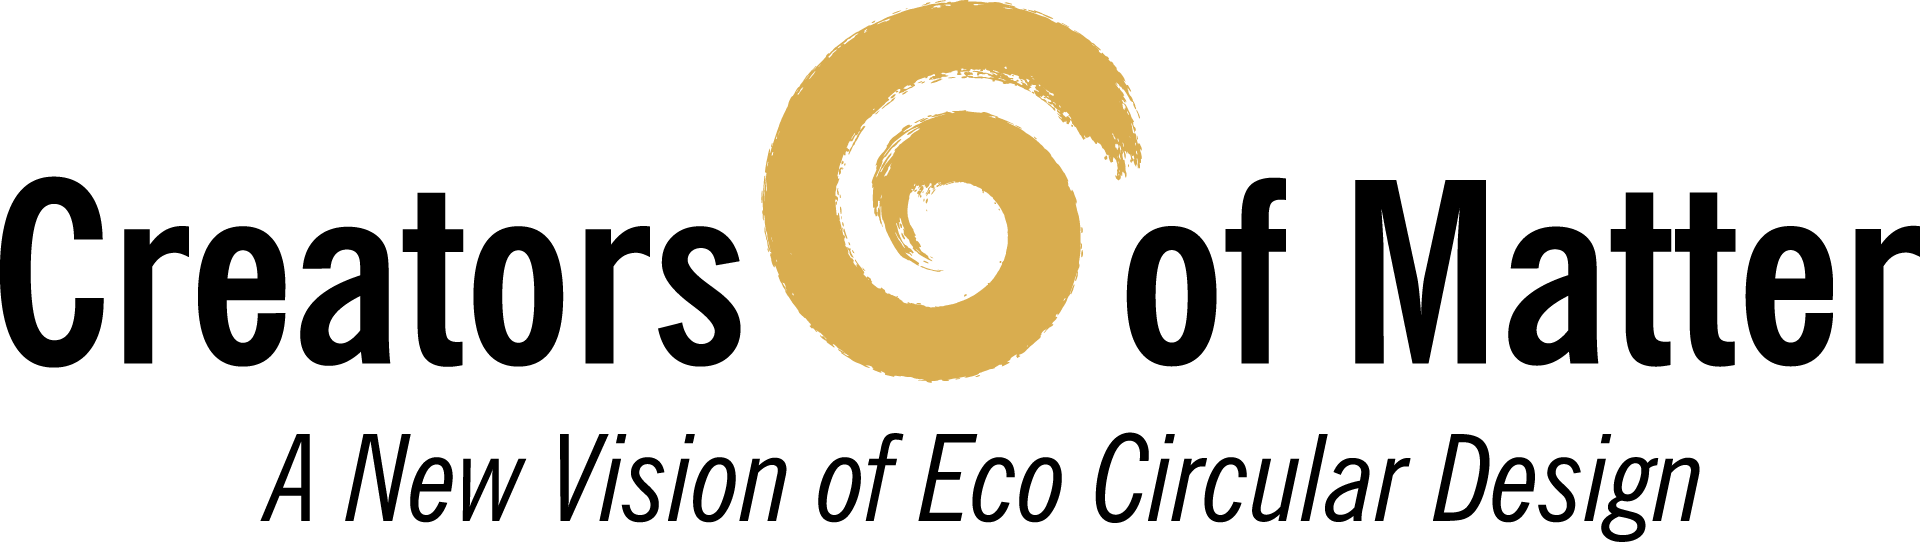 Eco Circular Design - Creators of Matter